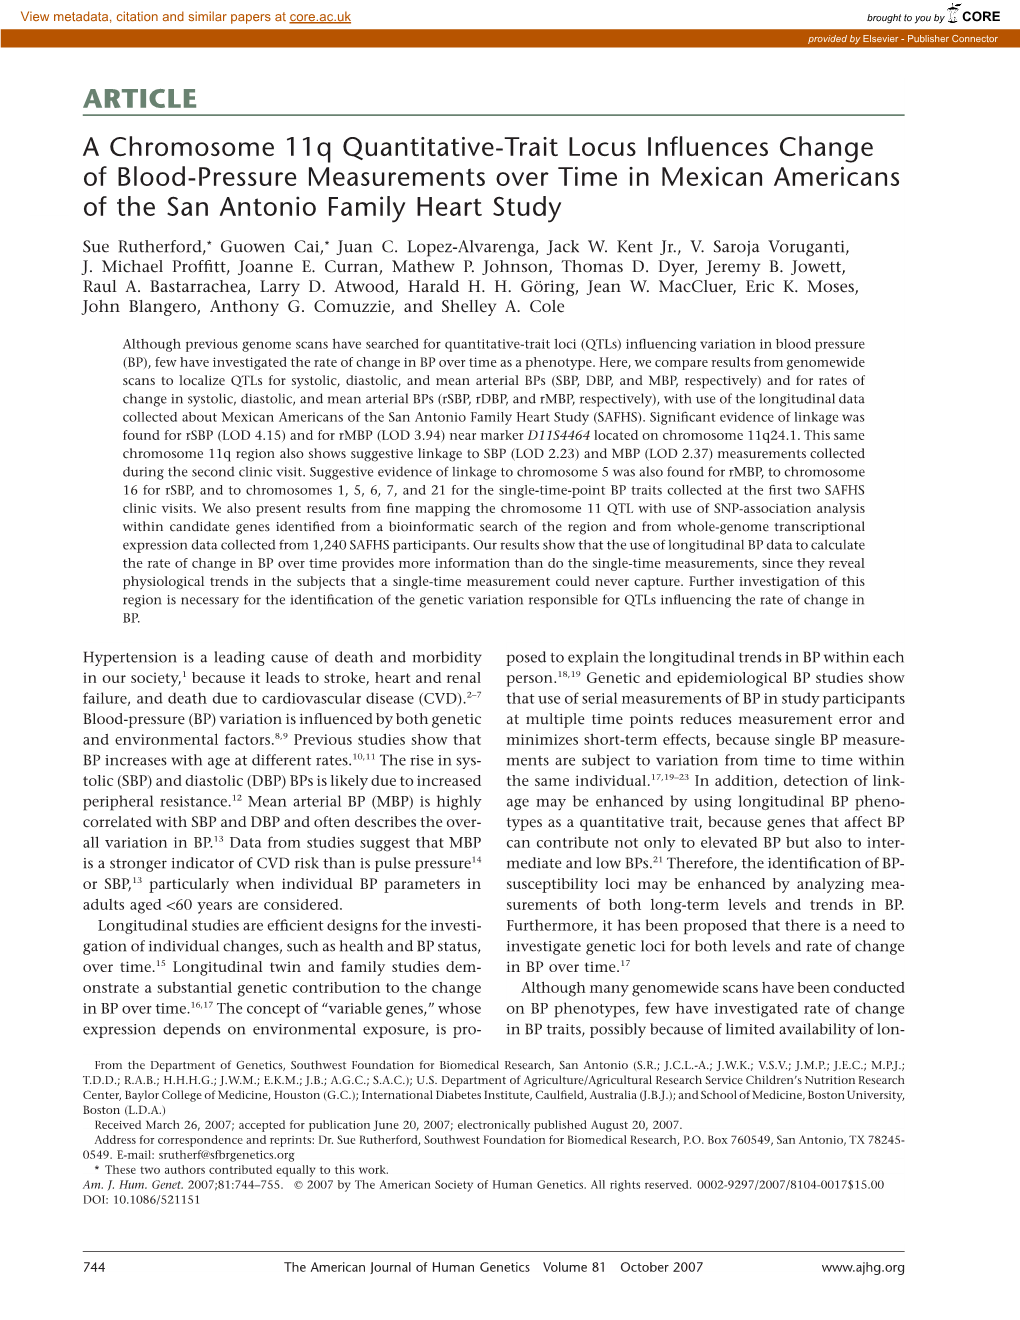 ARTICLE a Chromosome 11Q Quantitative-Trait Locus Influences Change of Blood-Pressure Measurements Over Time in Mexican American